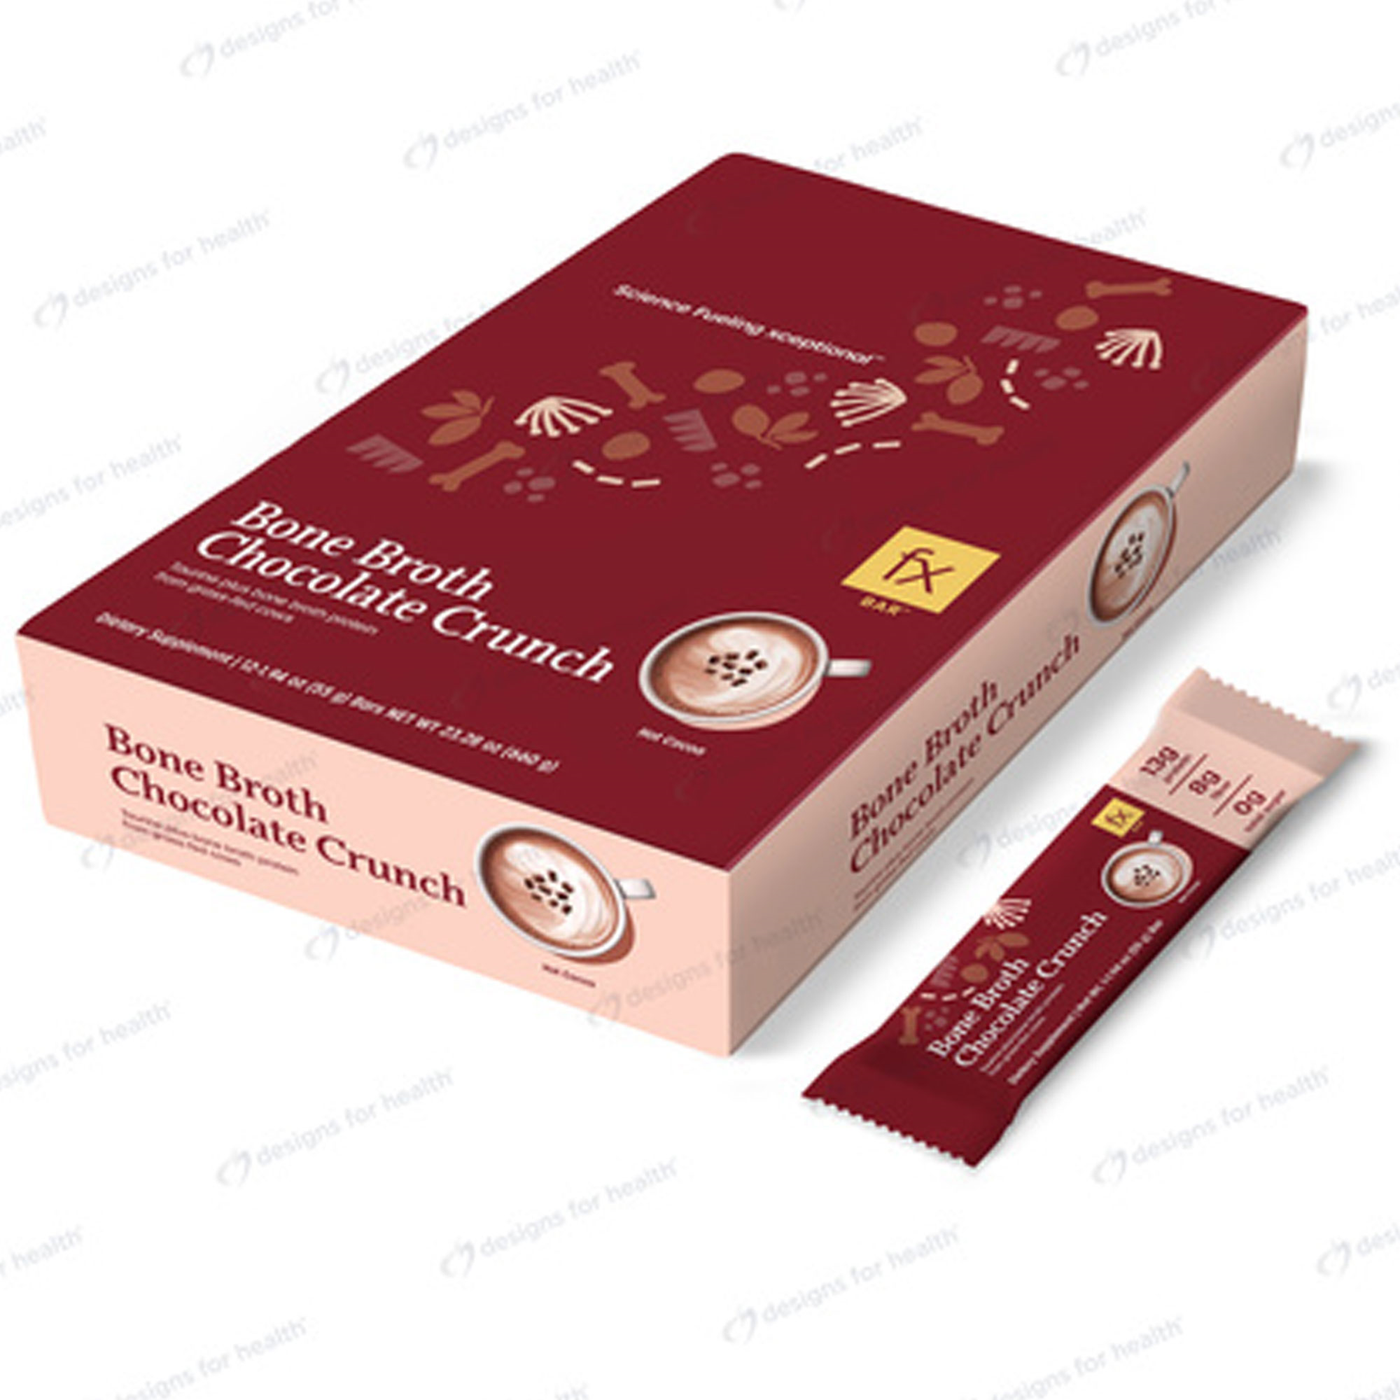 Bone Broth Chocolate Crunch Bars 12 ct Curated Wellness